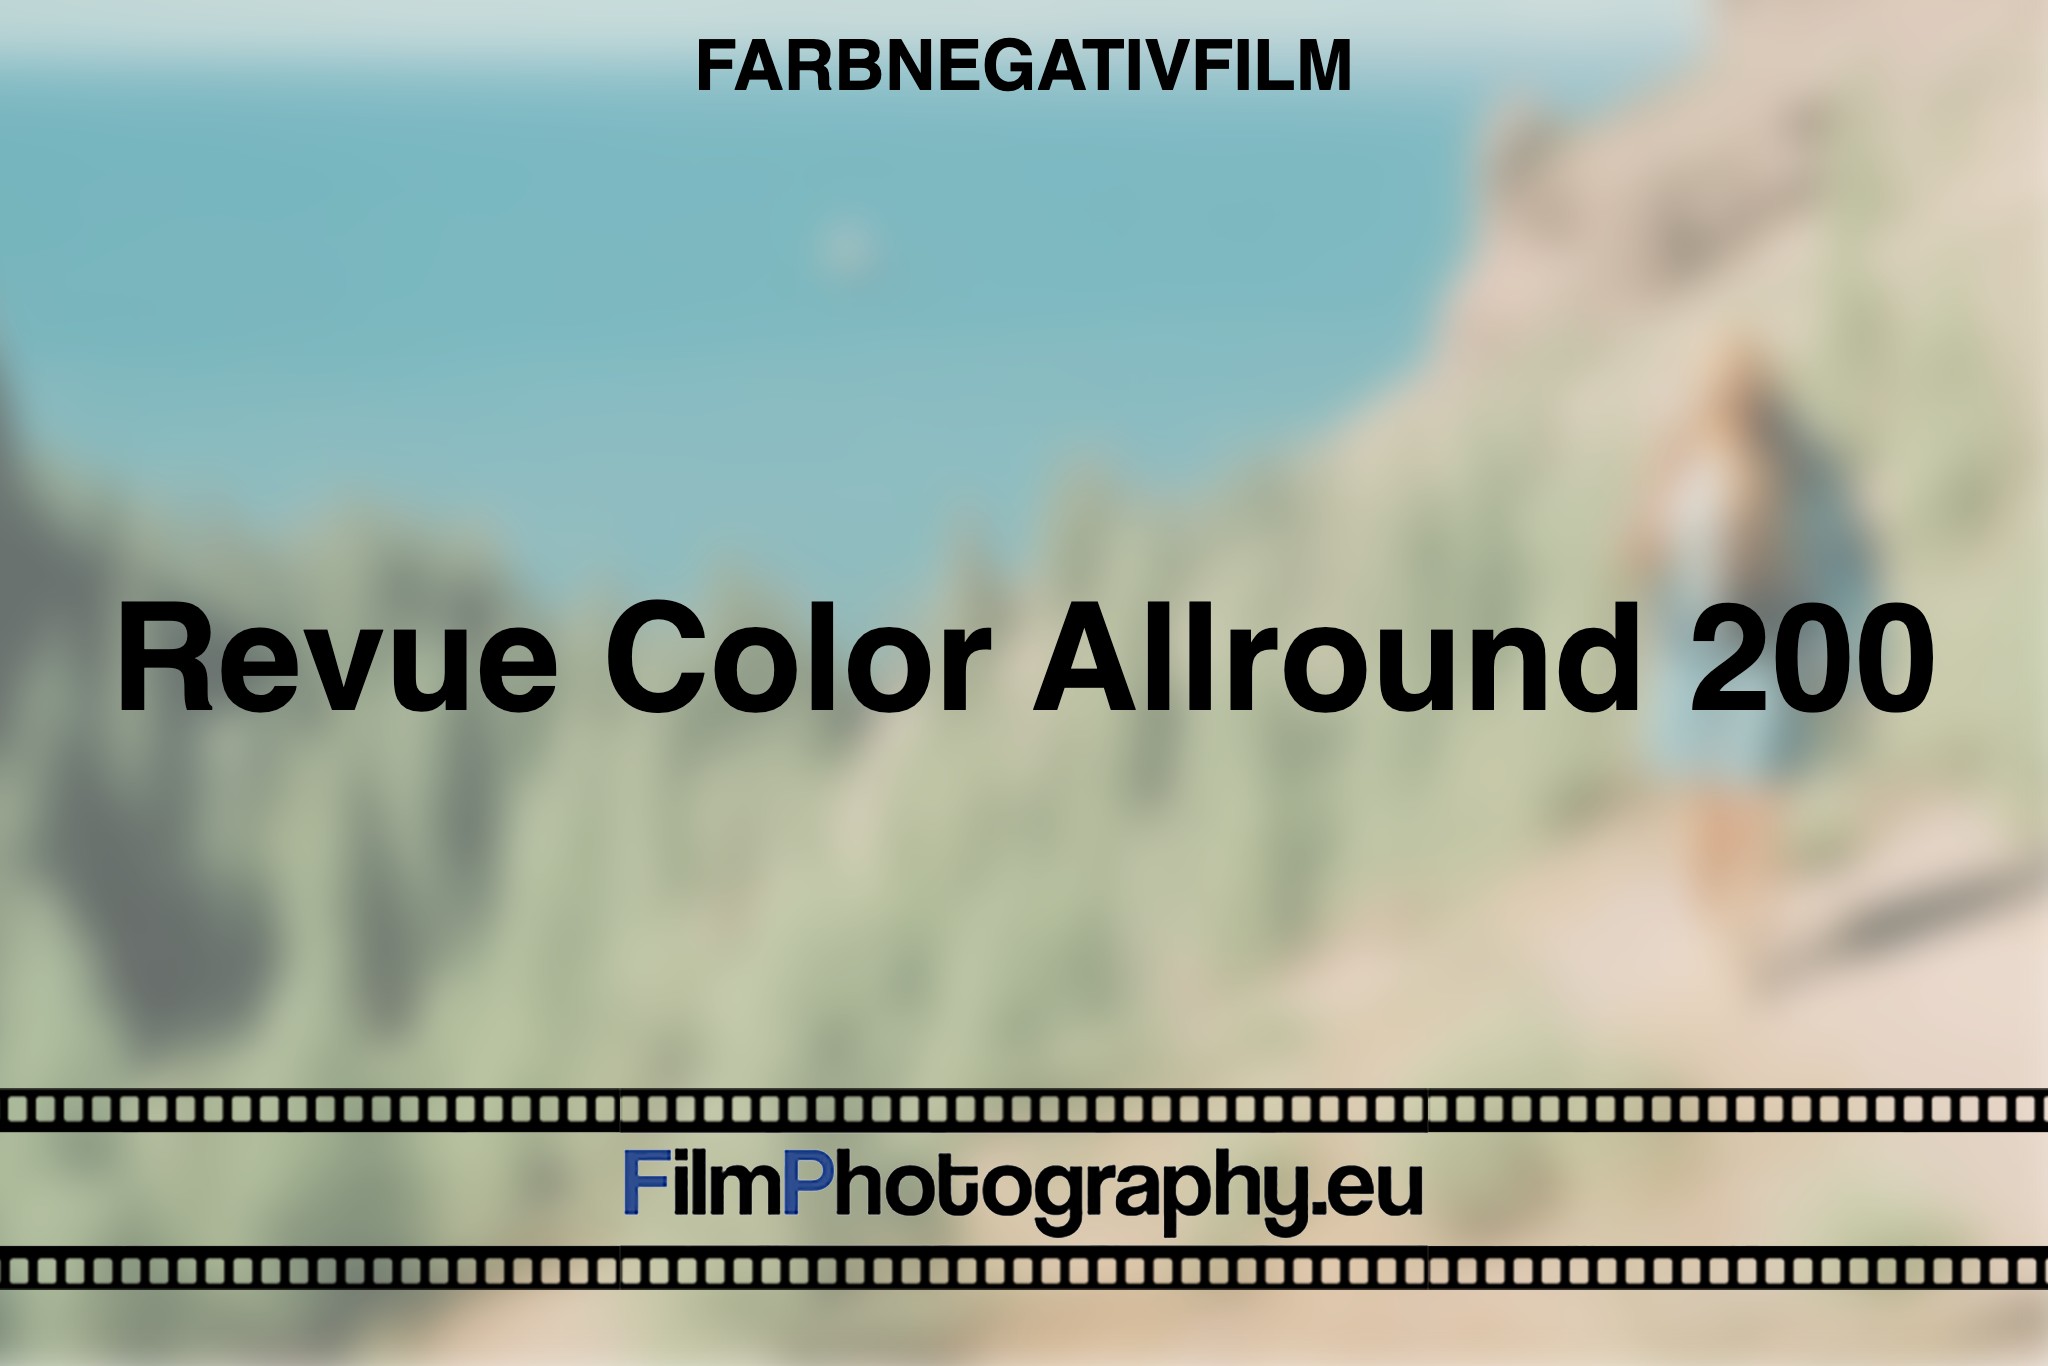 revue-color-allround-200-farbnegativfilm-bnv